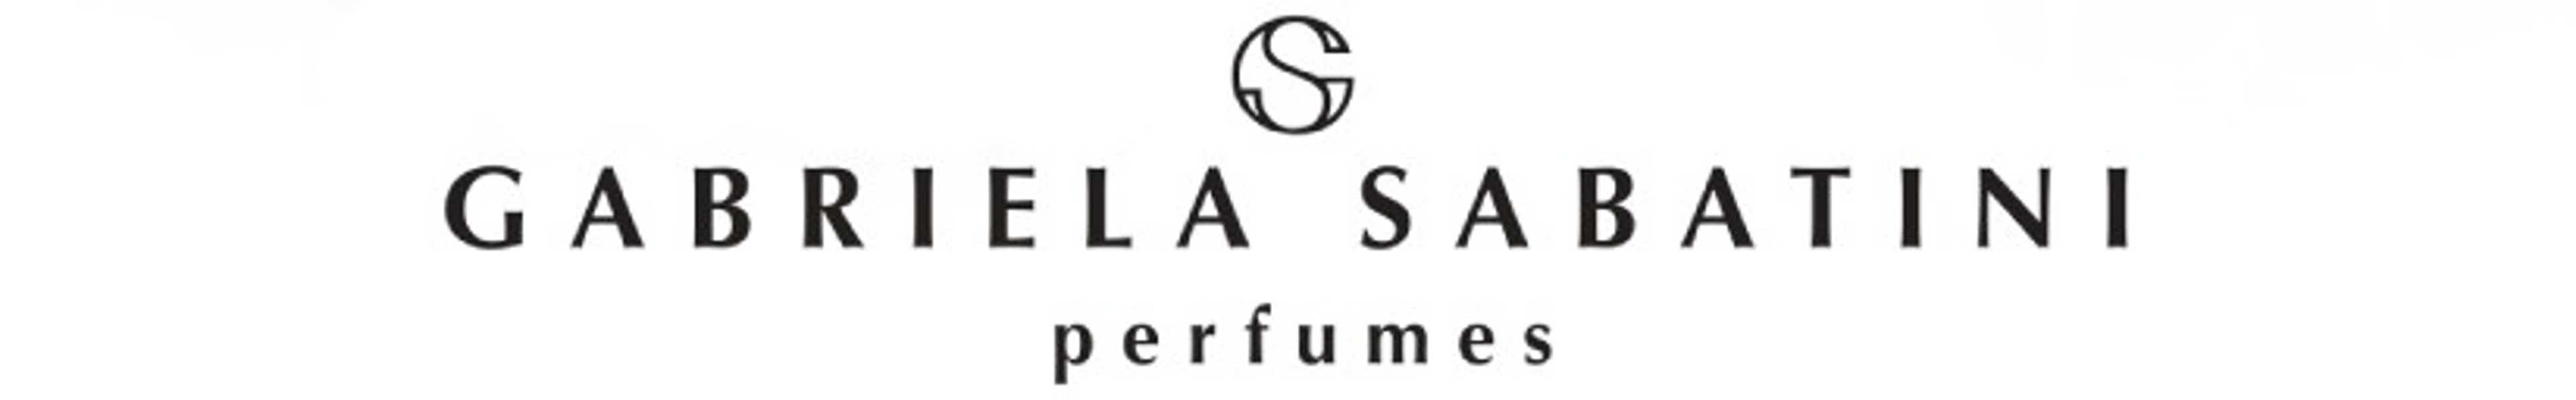 gabriella-sabatini-logo.jpg